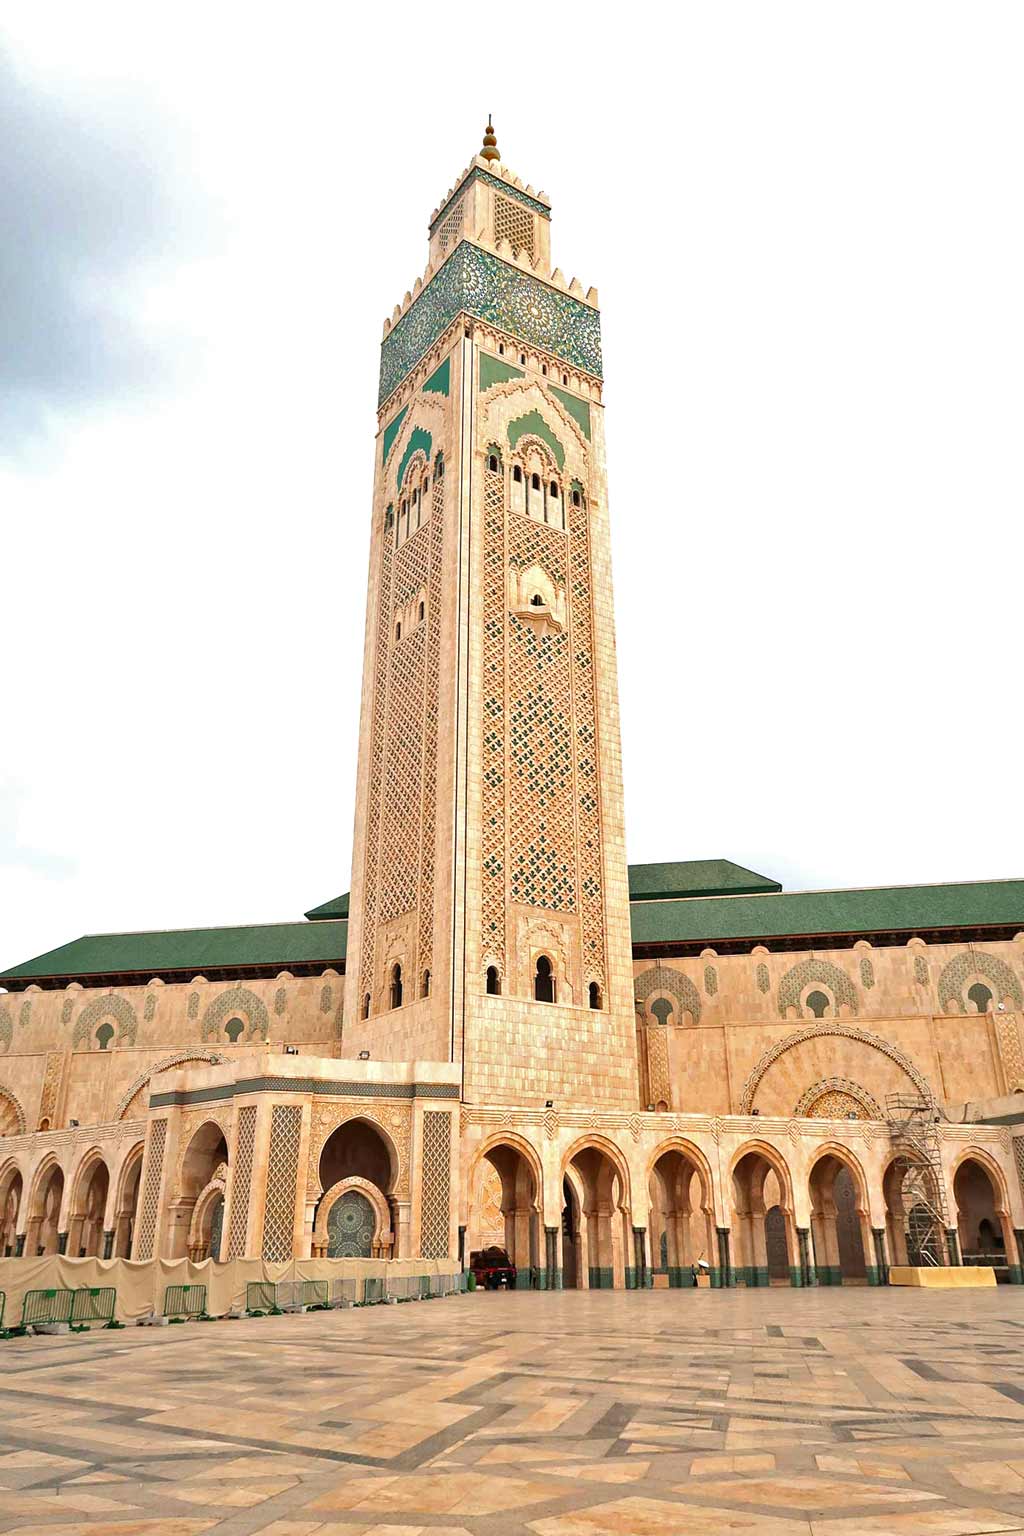 Die prachtvolle Moschee Hassan II. - Marokko Roadtrip - likeontravel